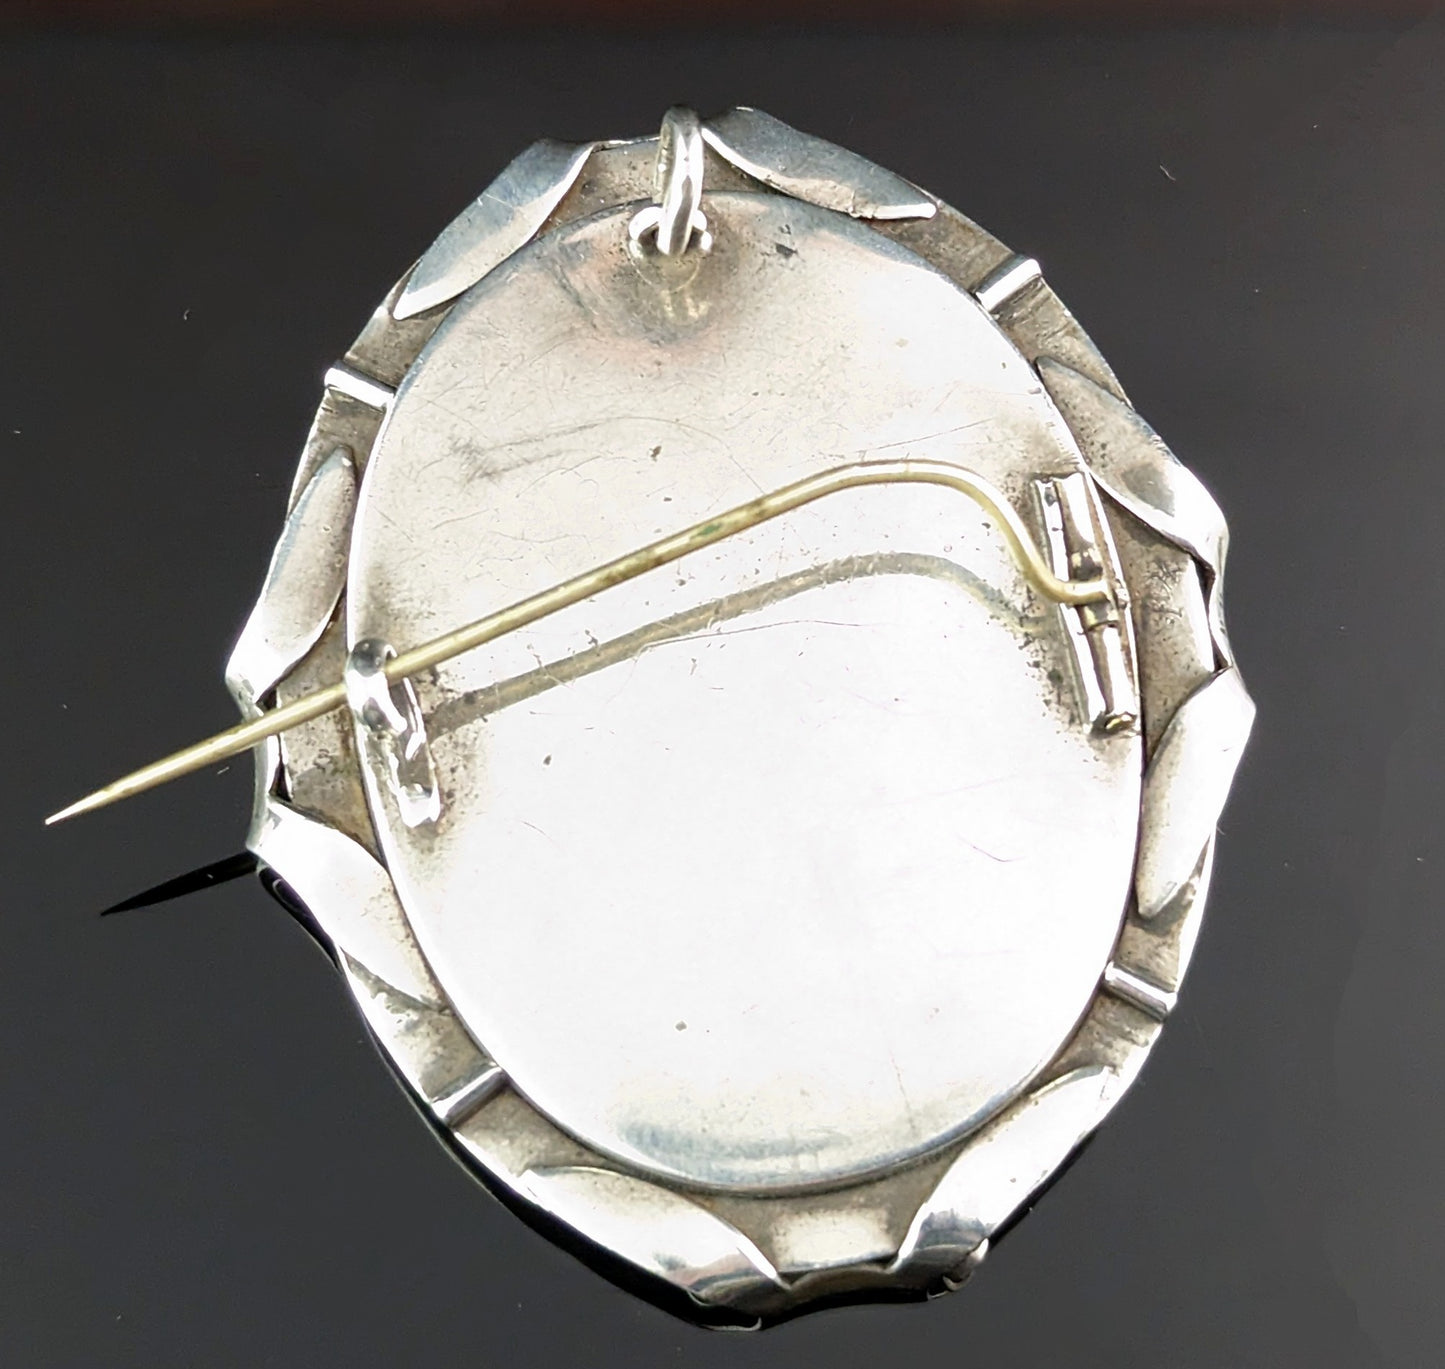 Antique Victorian silver pendant brooch, Portrait, sterling silver